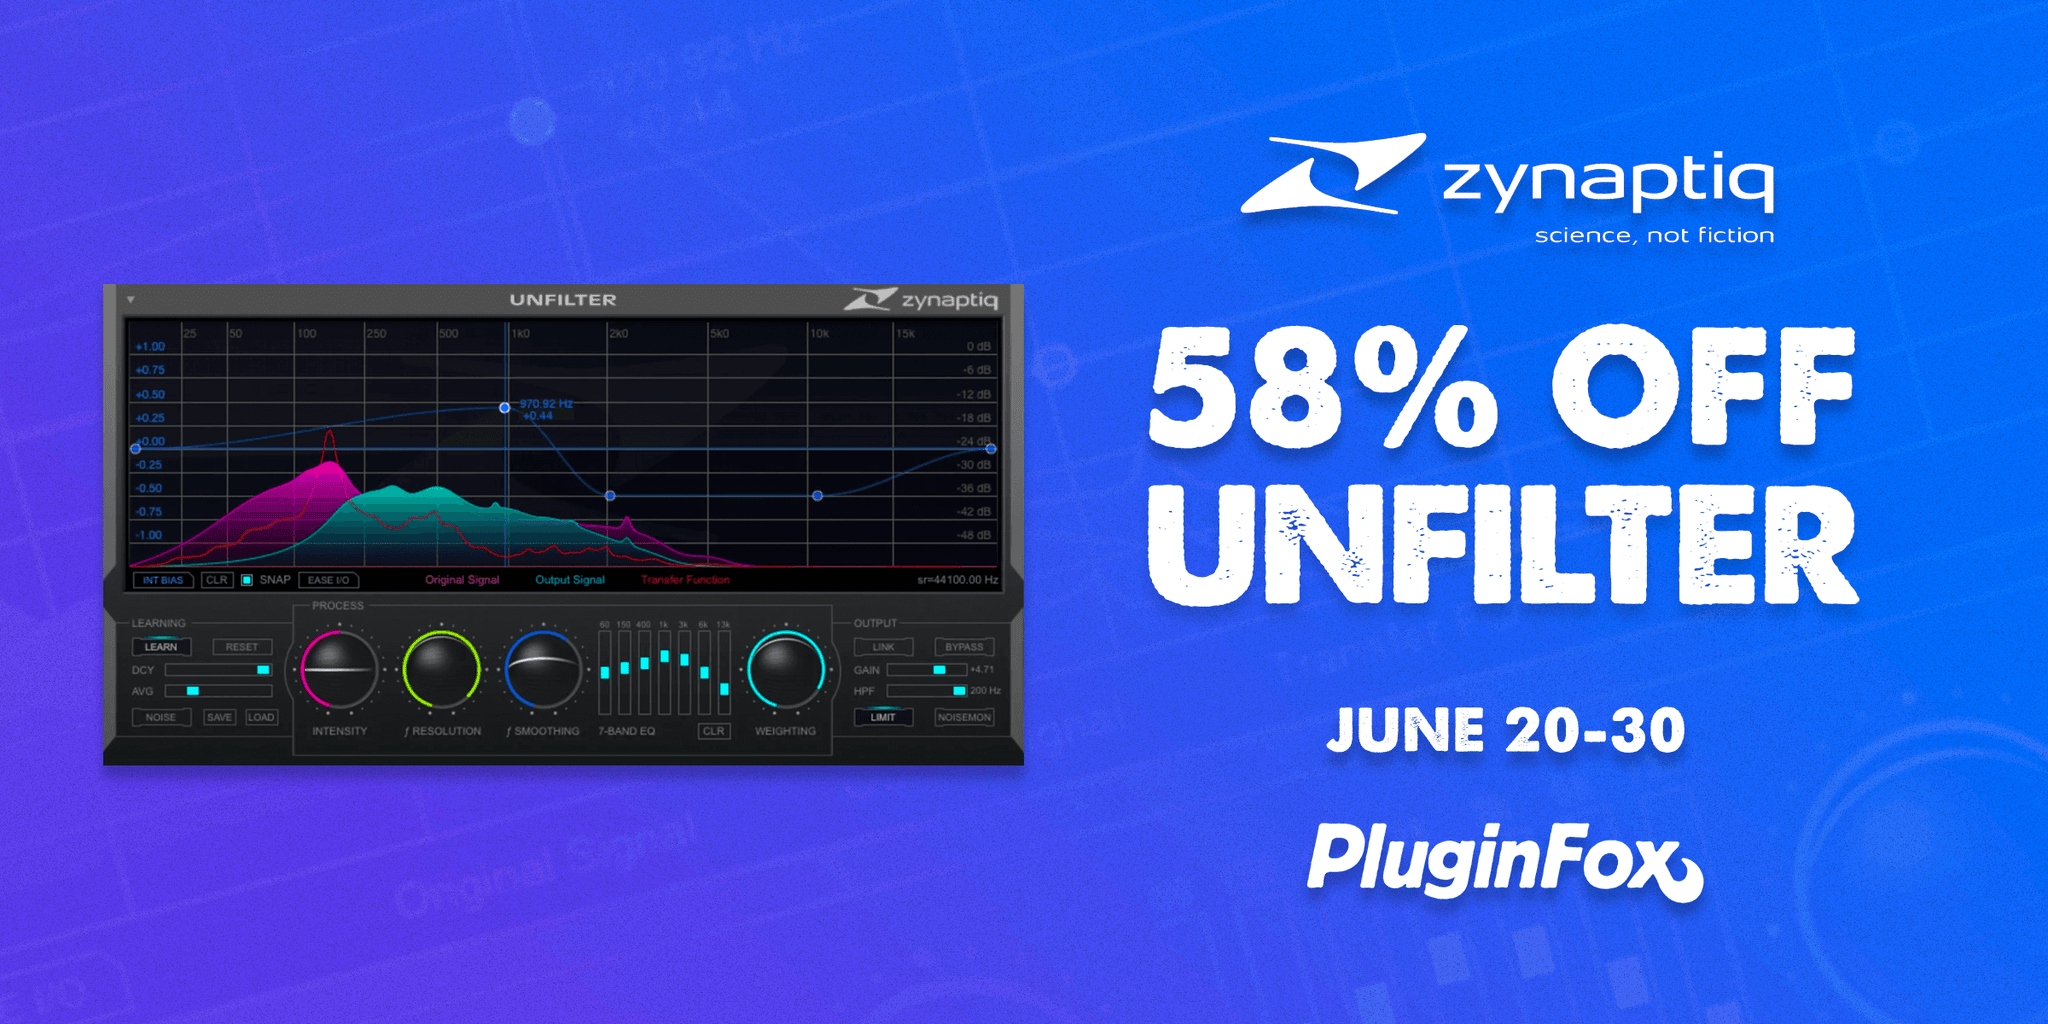 Zynaptiq Unfilter Flash Sale - June 20-30